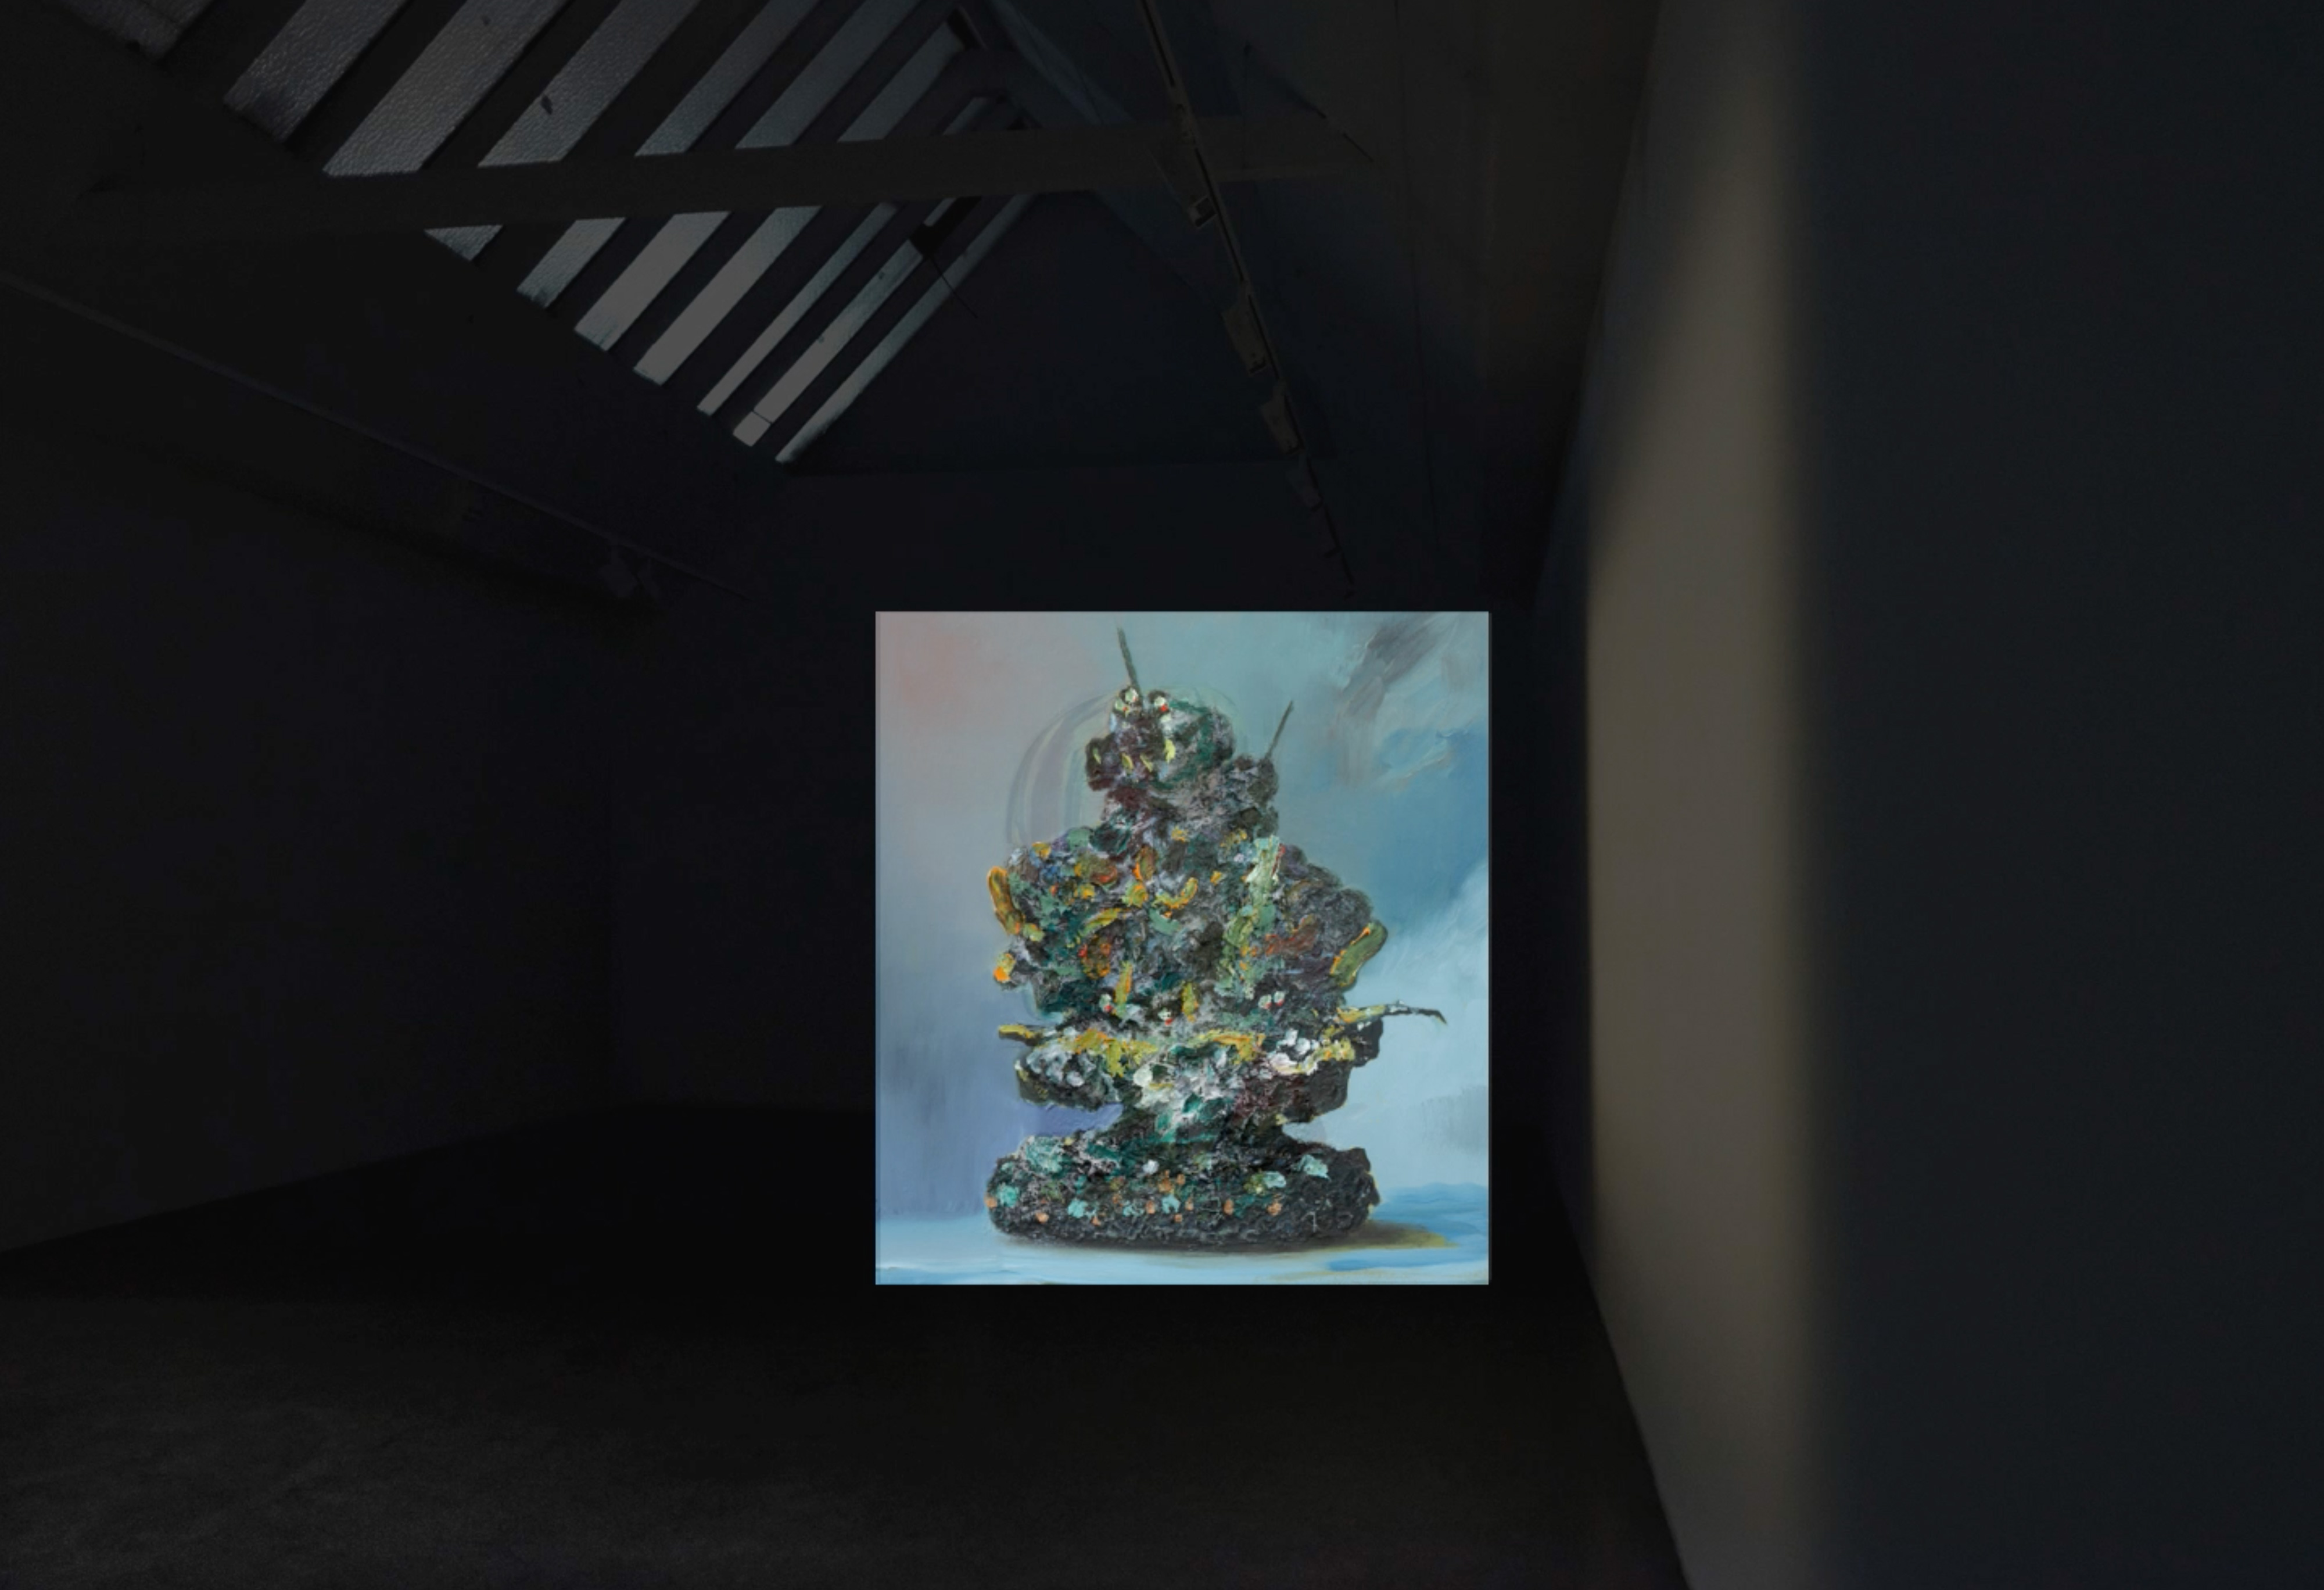 Galerie Barbara Thumm \ New Viewings #36 \ Ivan Seal